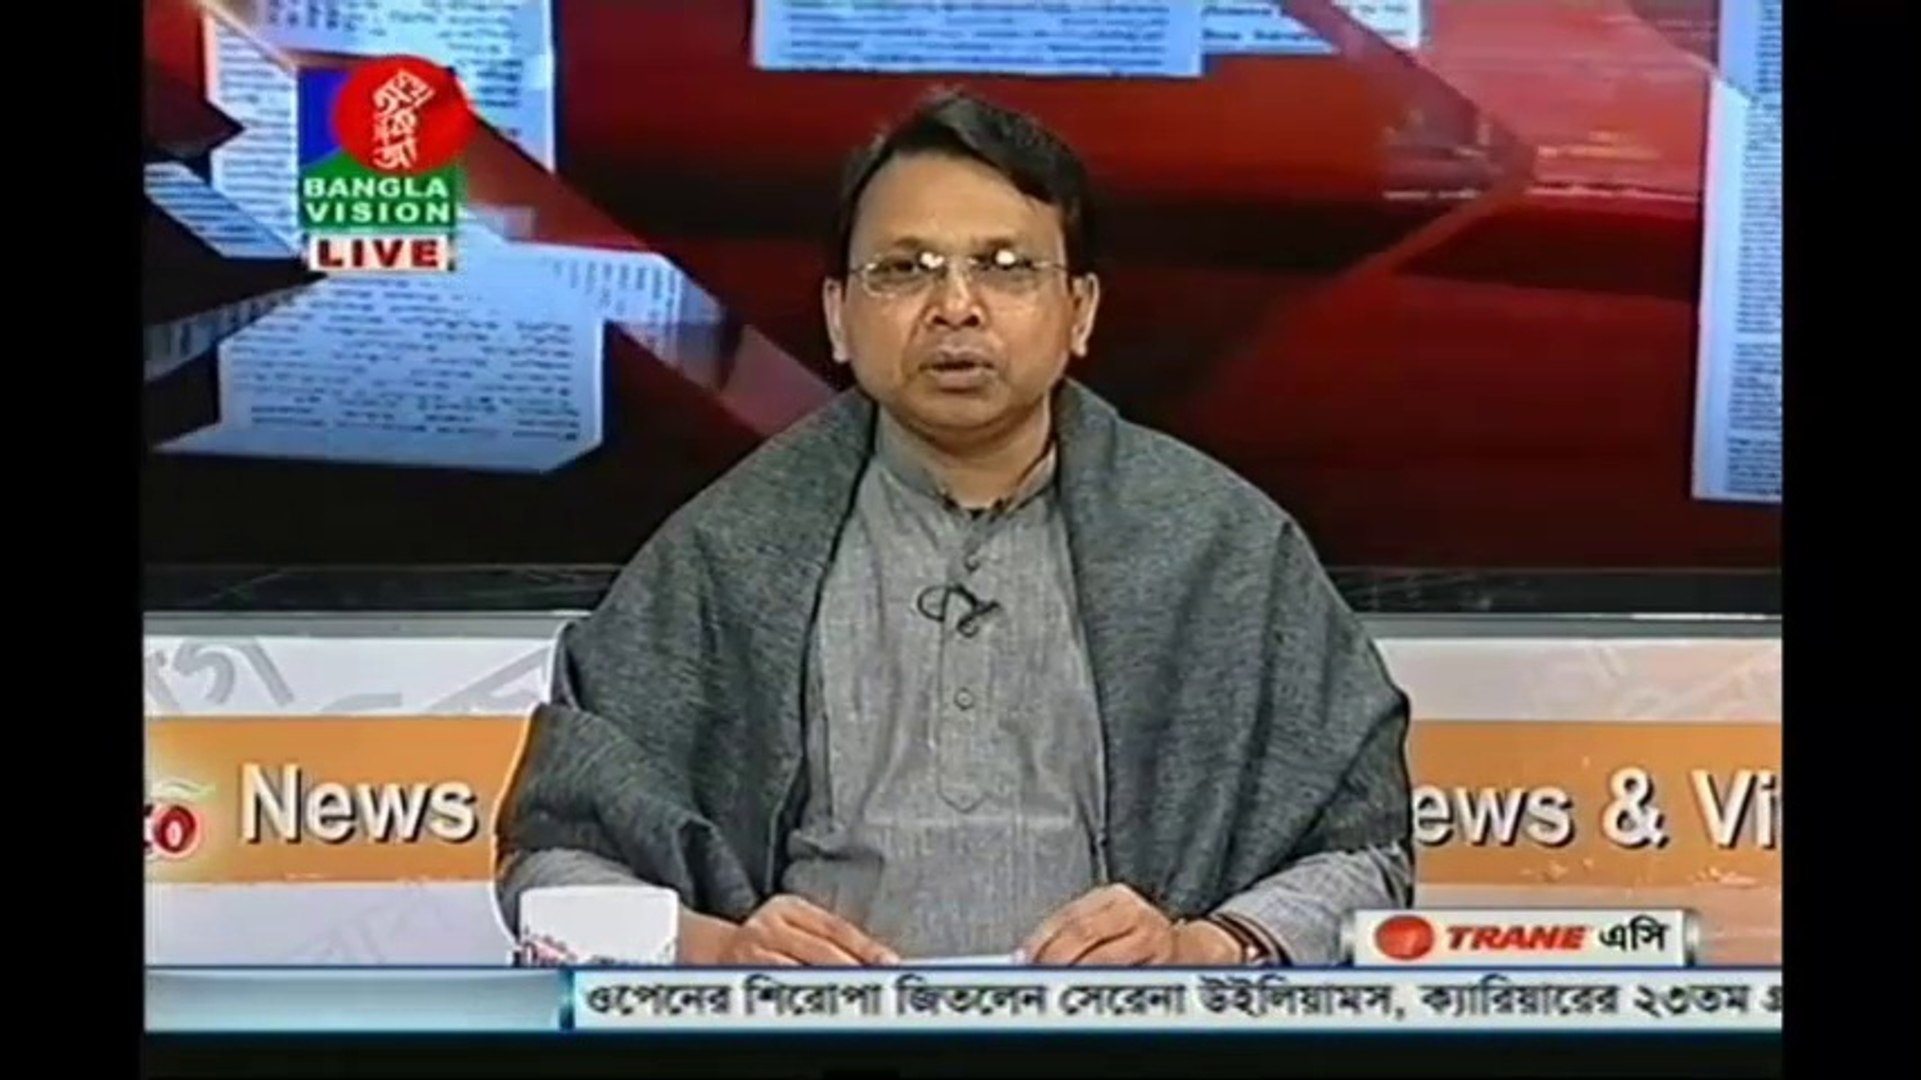 Bangladesh Political Talk Shows News & Views, 29 January 2017